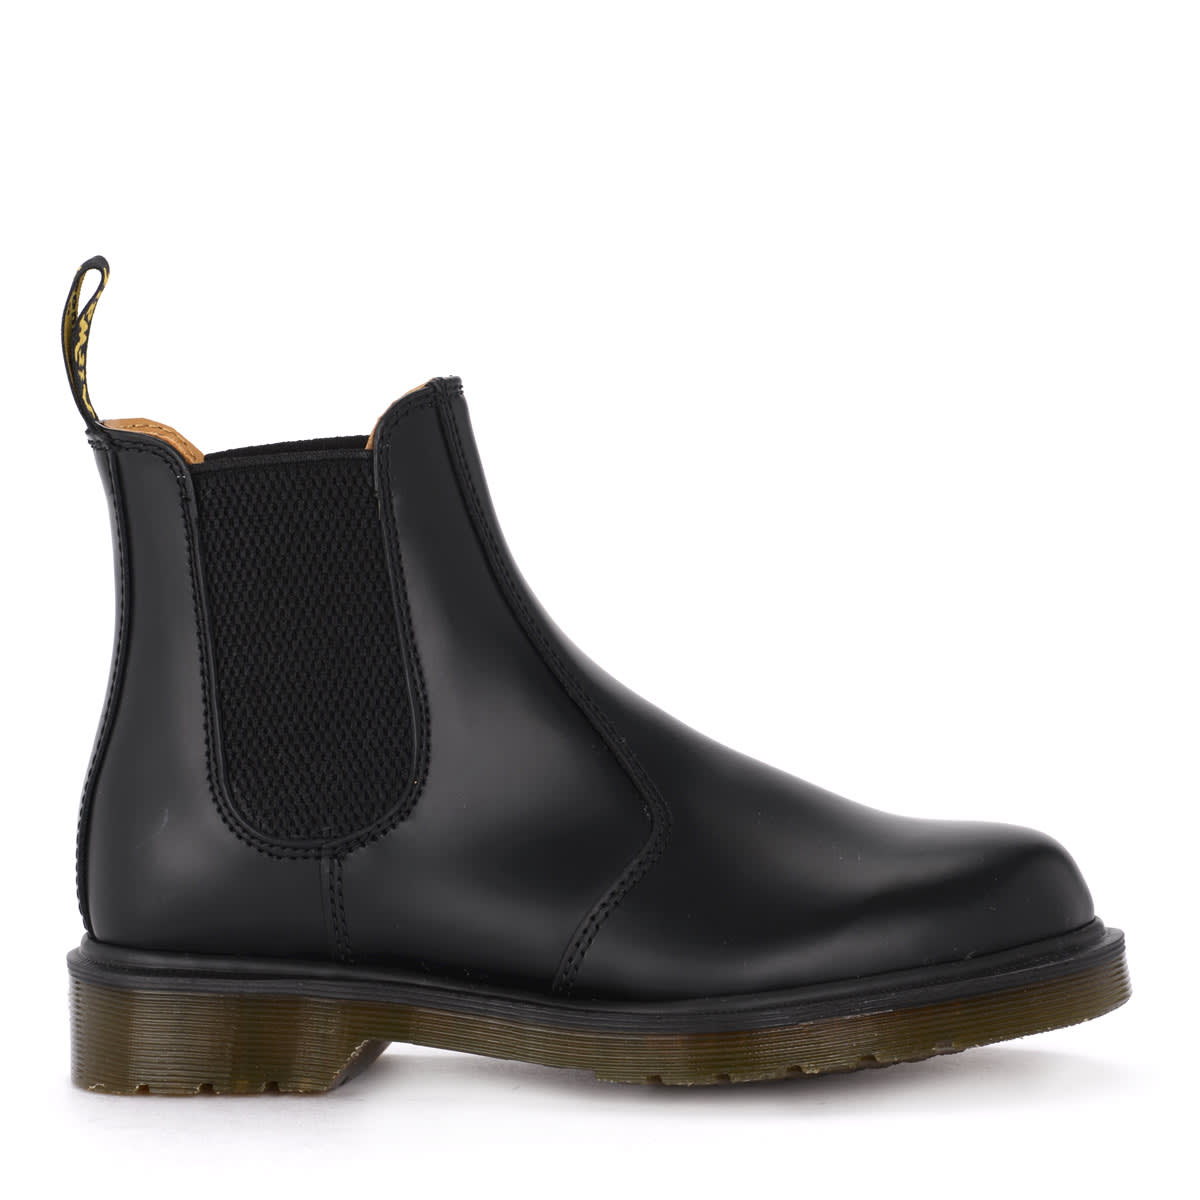 Dr. Martens 2976 Black Leather Ankle Boots